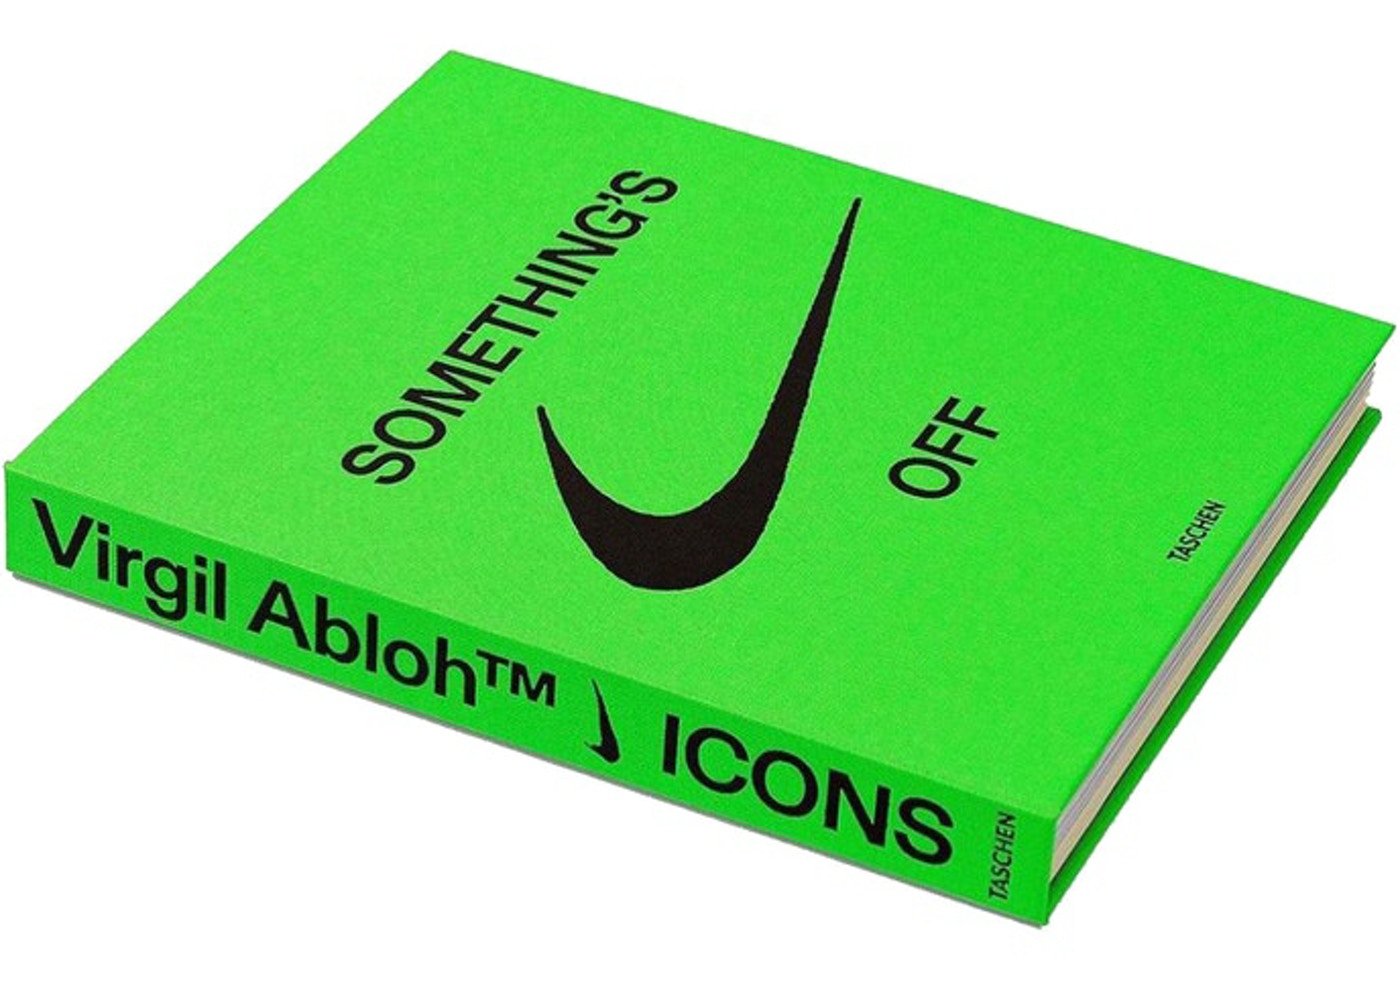 Nike x Virgil Abloh ICONS "THE TEN" Book - Supra Sneakers